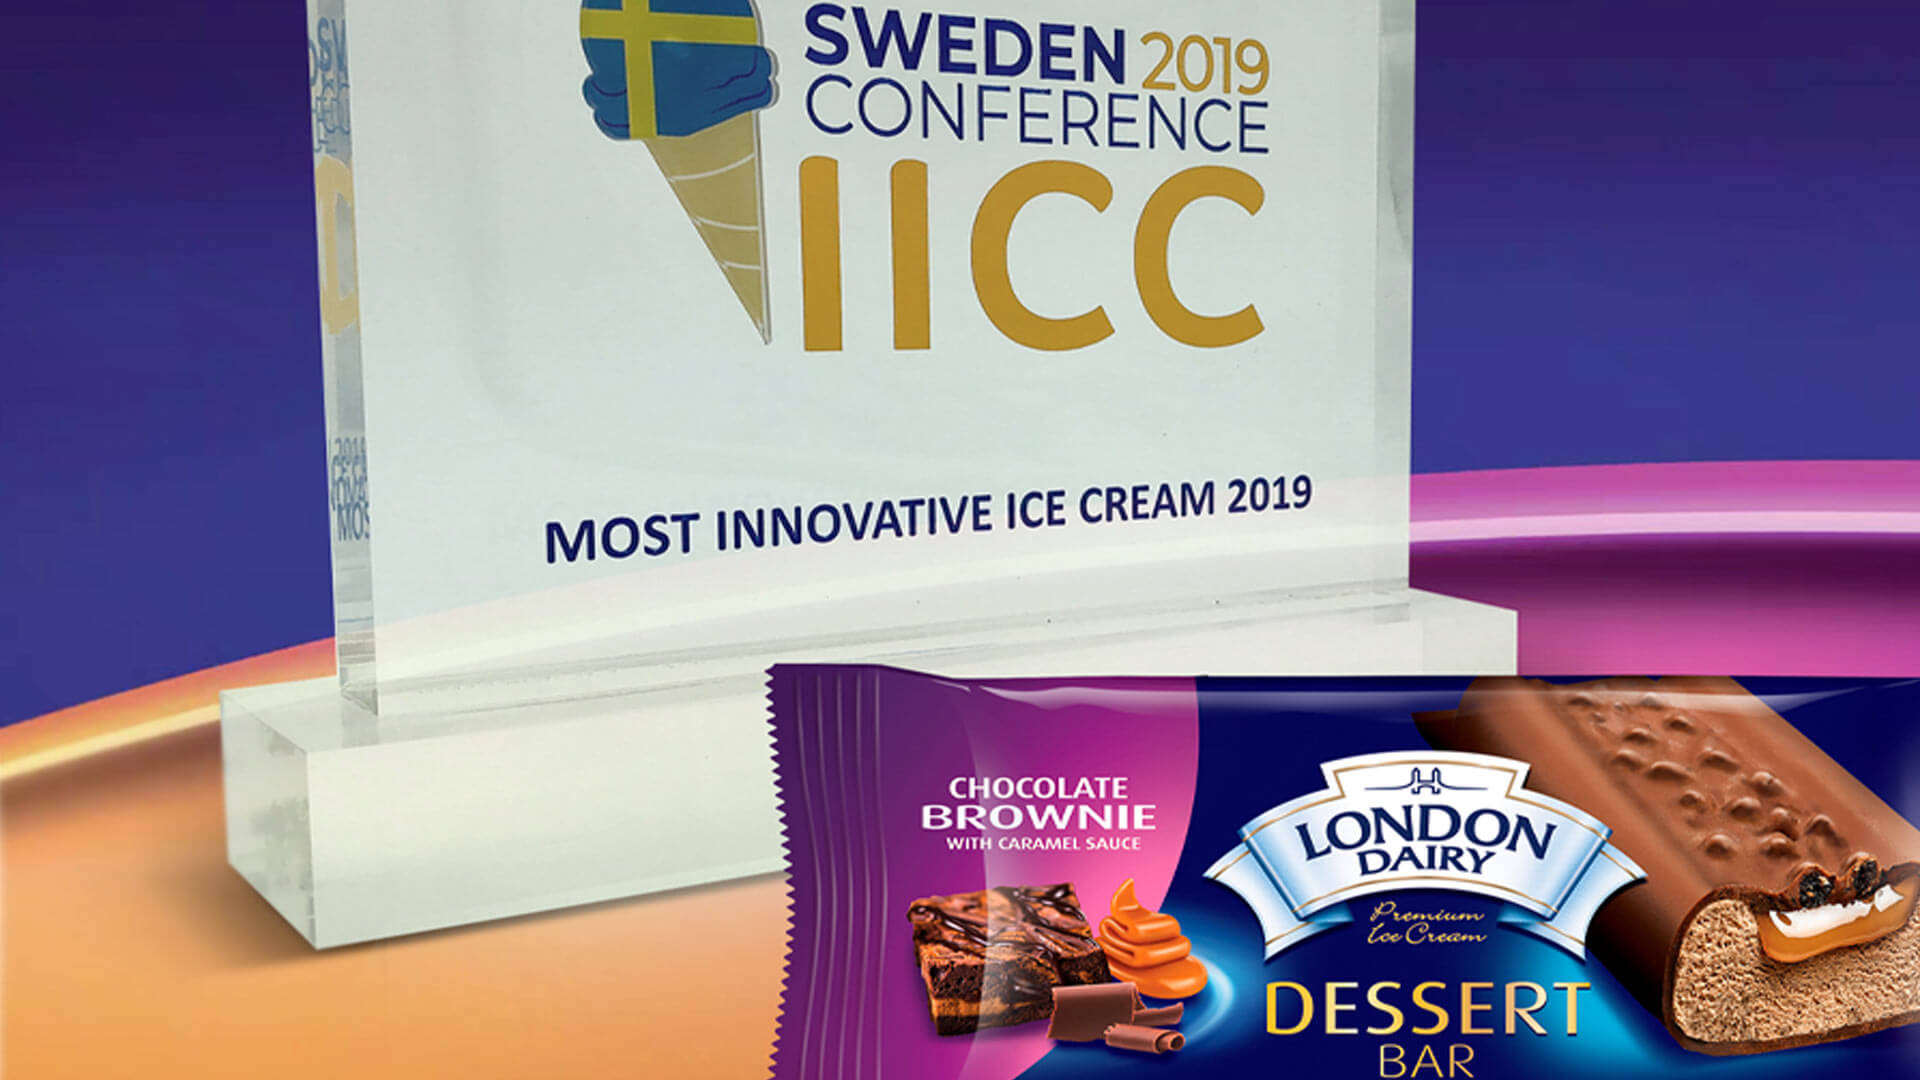 LONDON DAIRY CHOCOLATE BROWNIE DESSERT BAR WINS MOST INNOVATIVE ICE CREAM AWARD